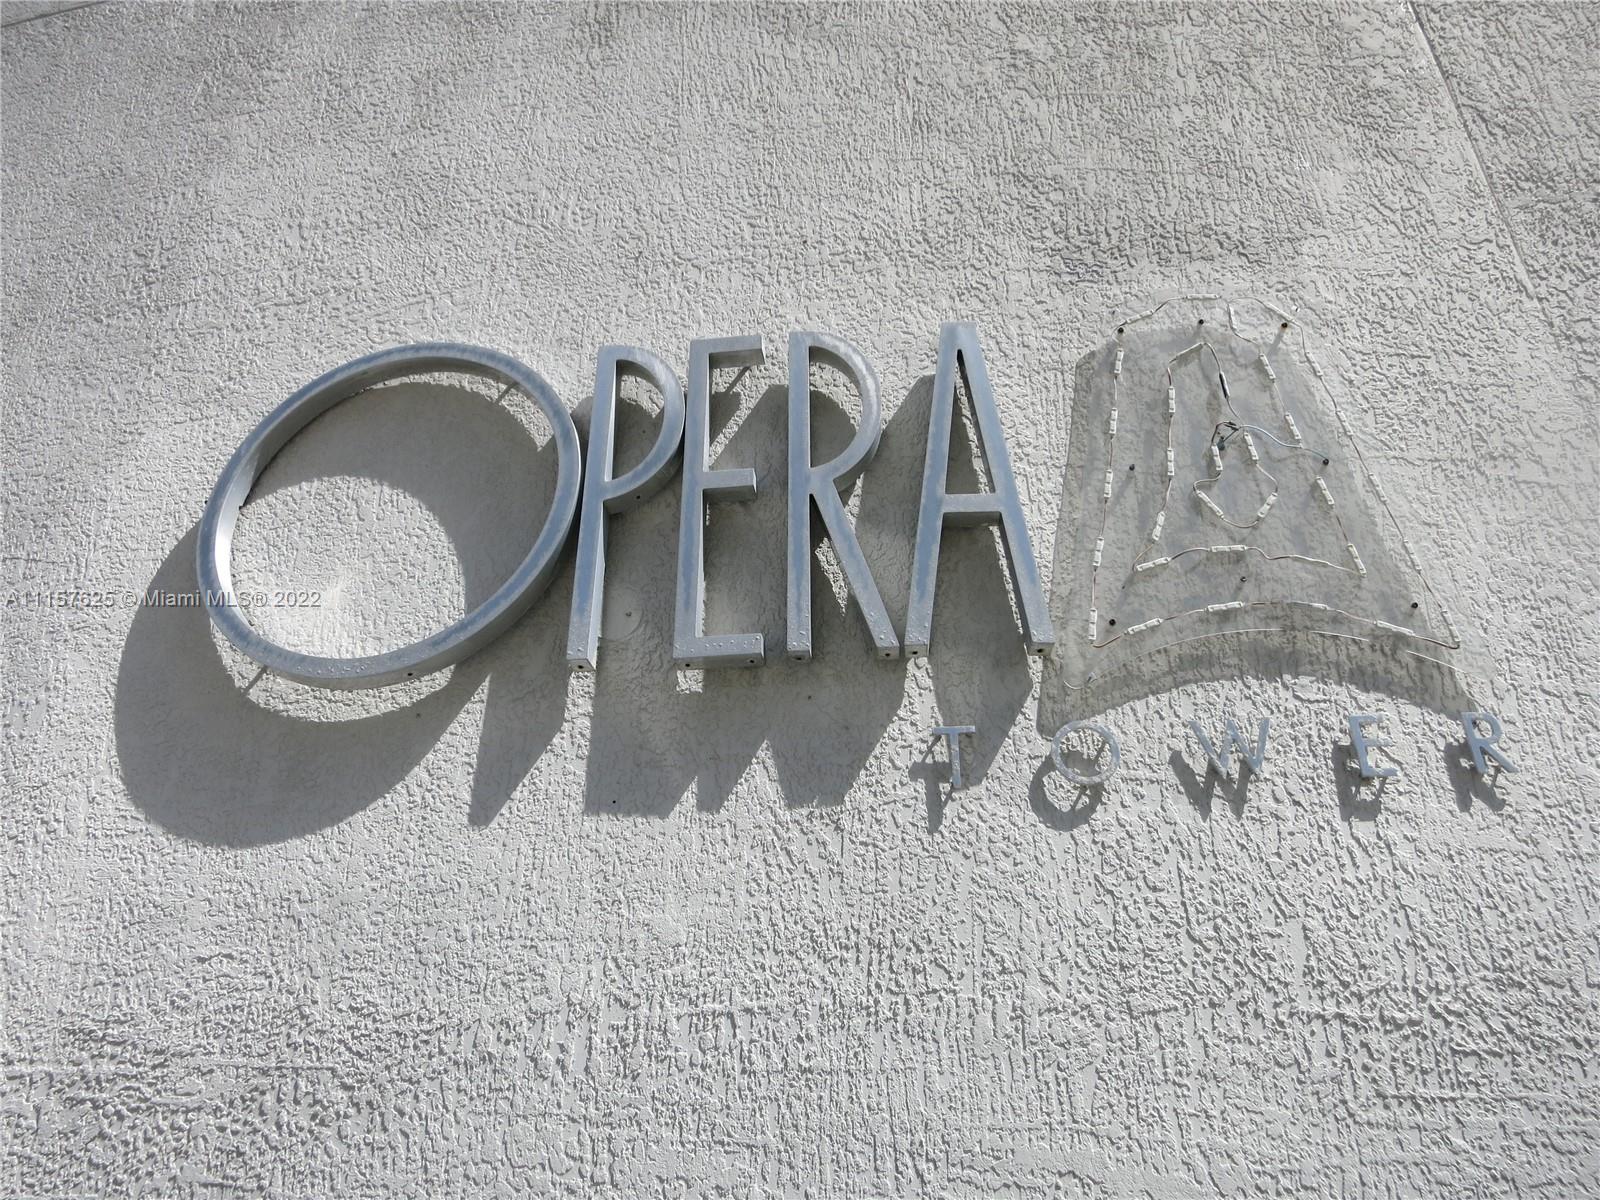 Opera Tower #1